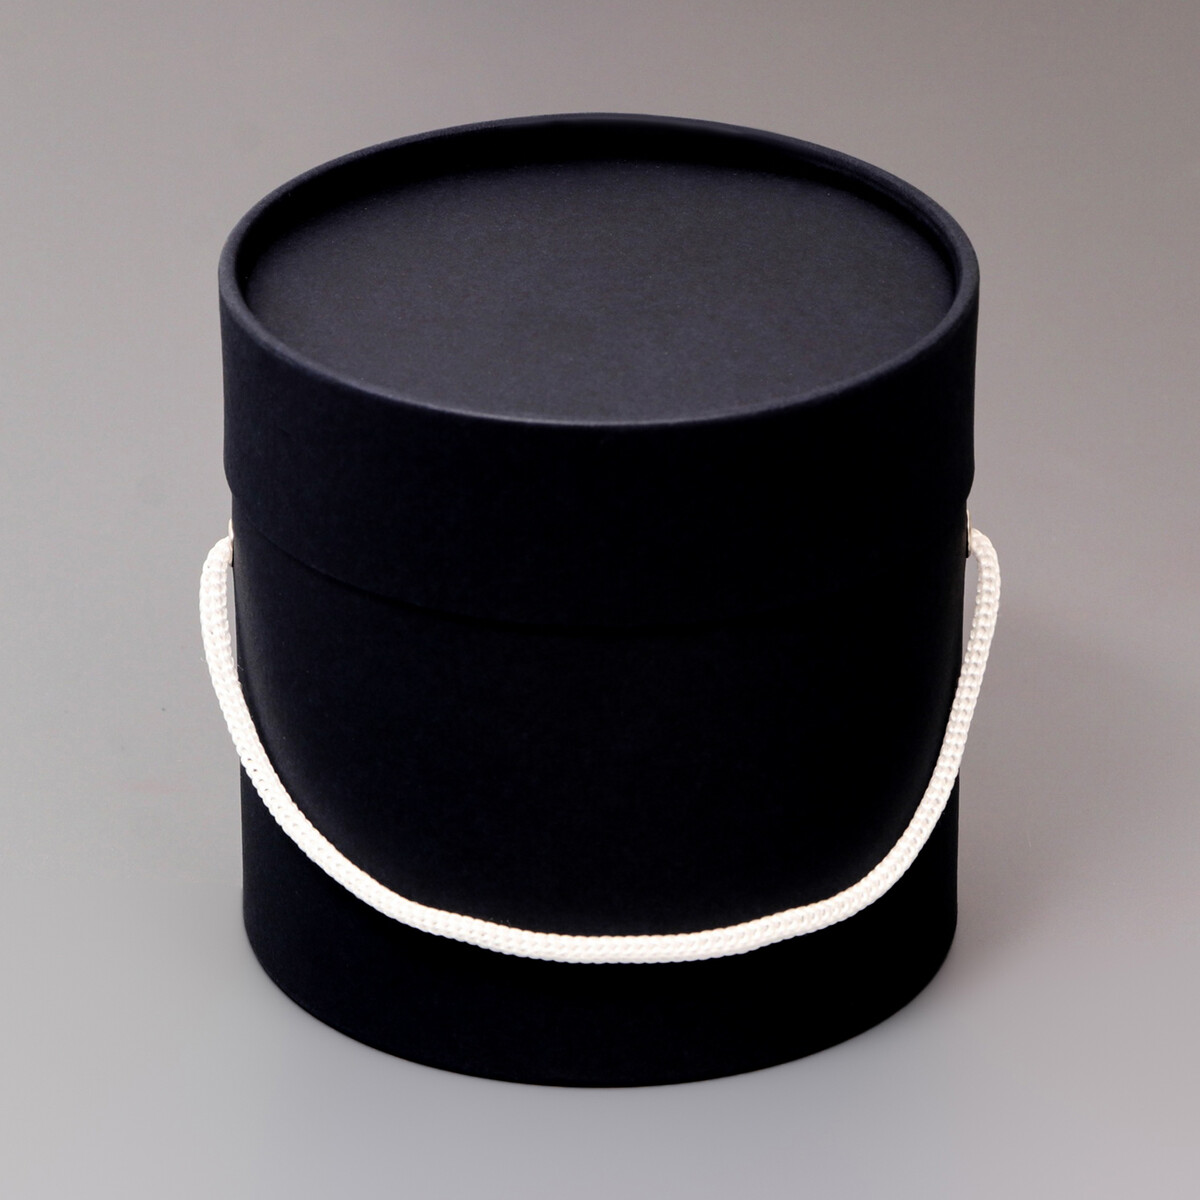 Подарочная коробка, круглая, черная,с шнурком, 12 х 12 см круглая подарочная коробка